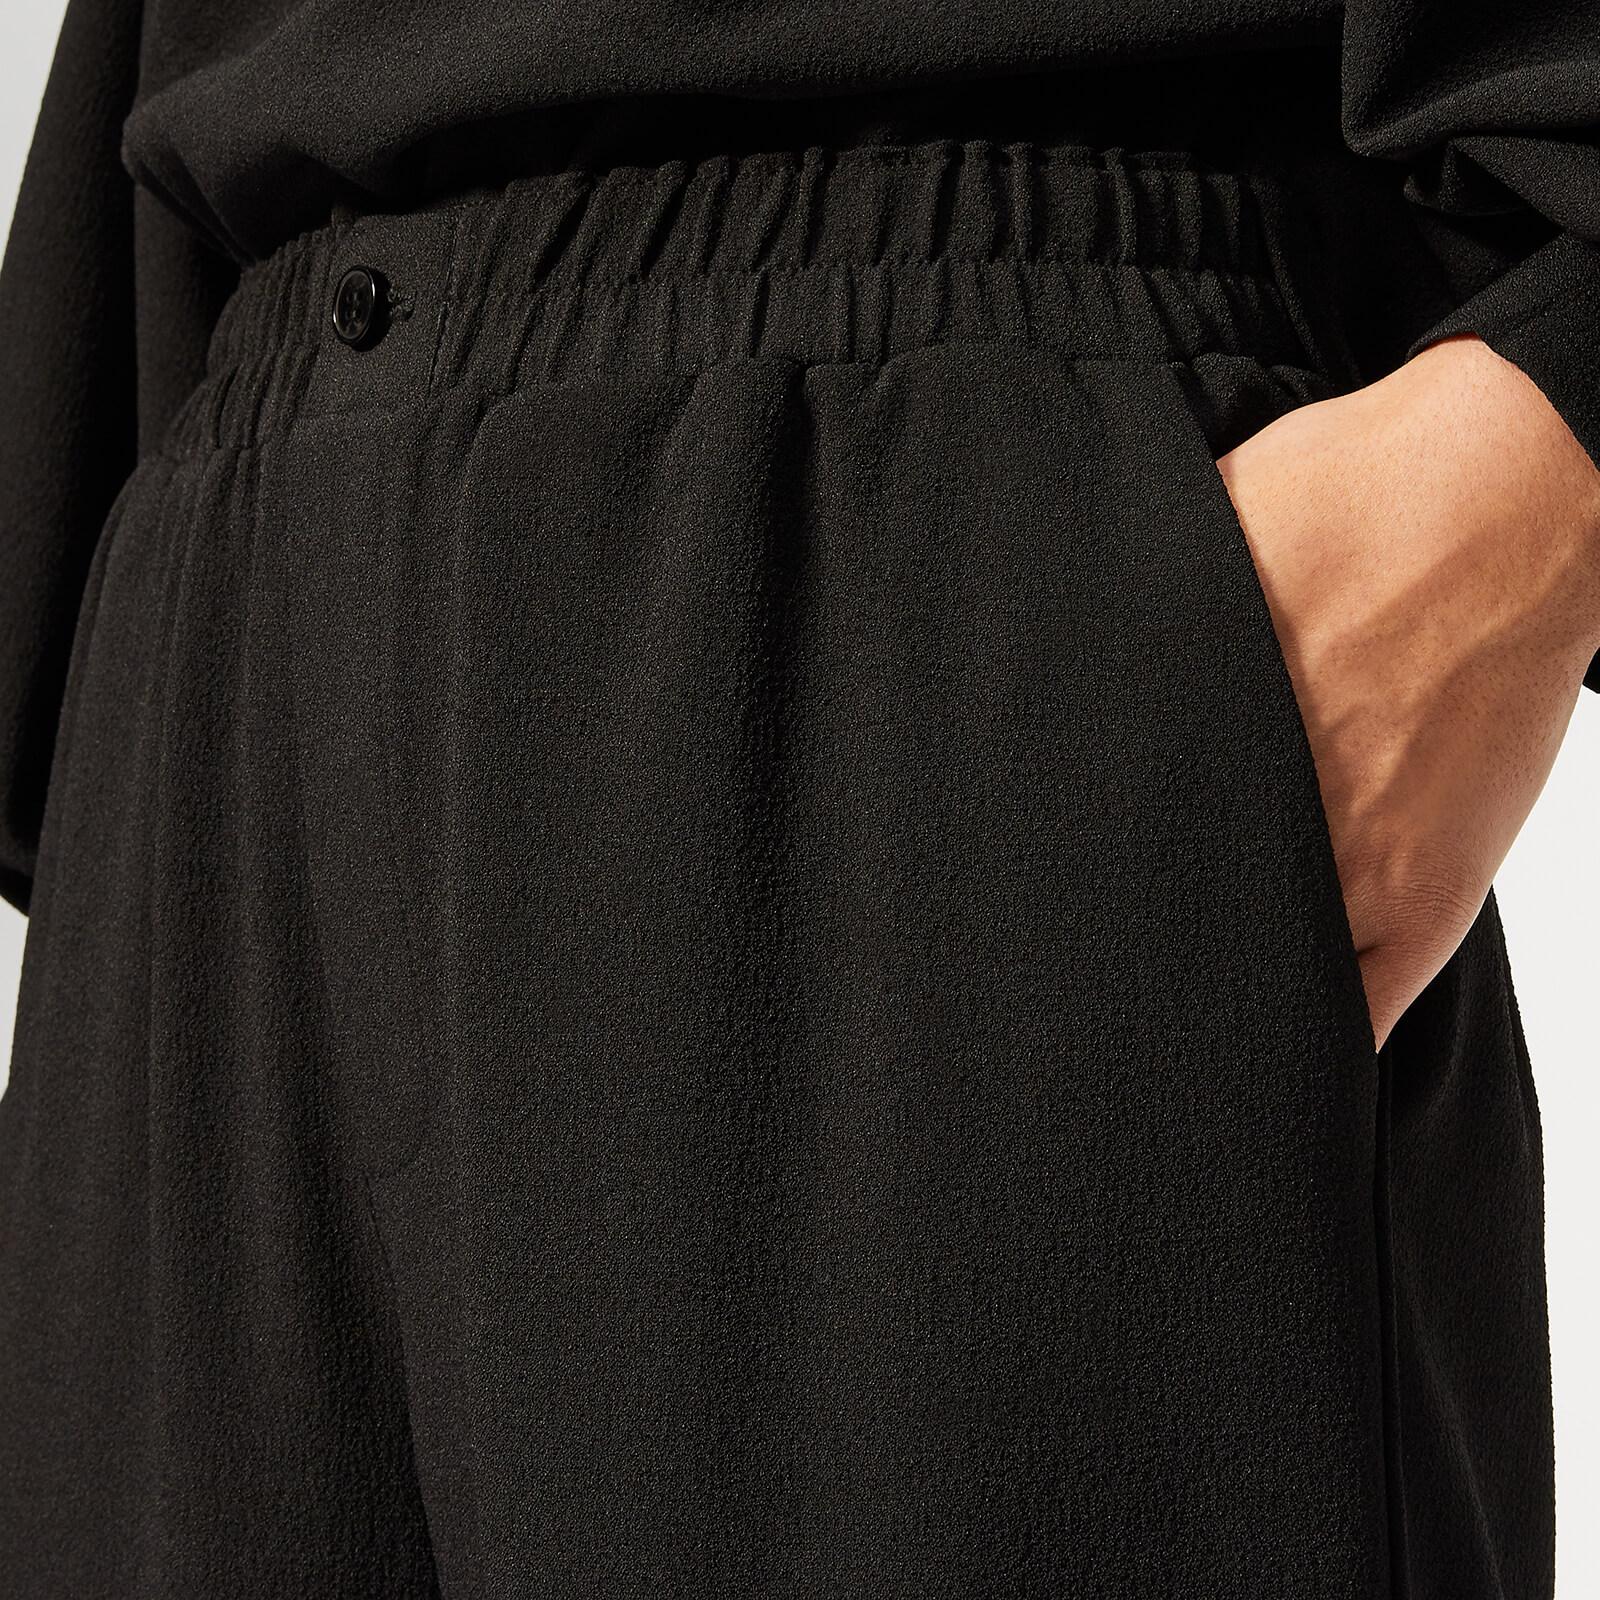 Ganni Clark Trousers in Black | Lyst Canada